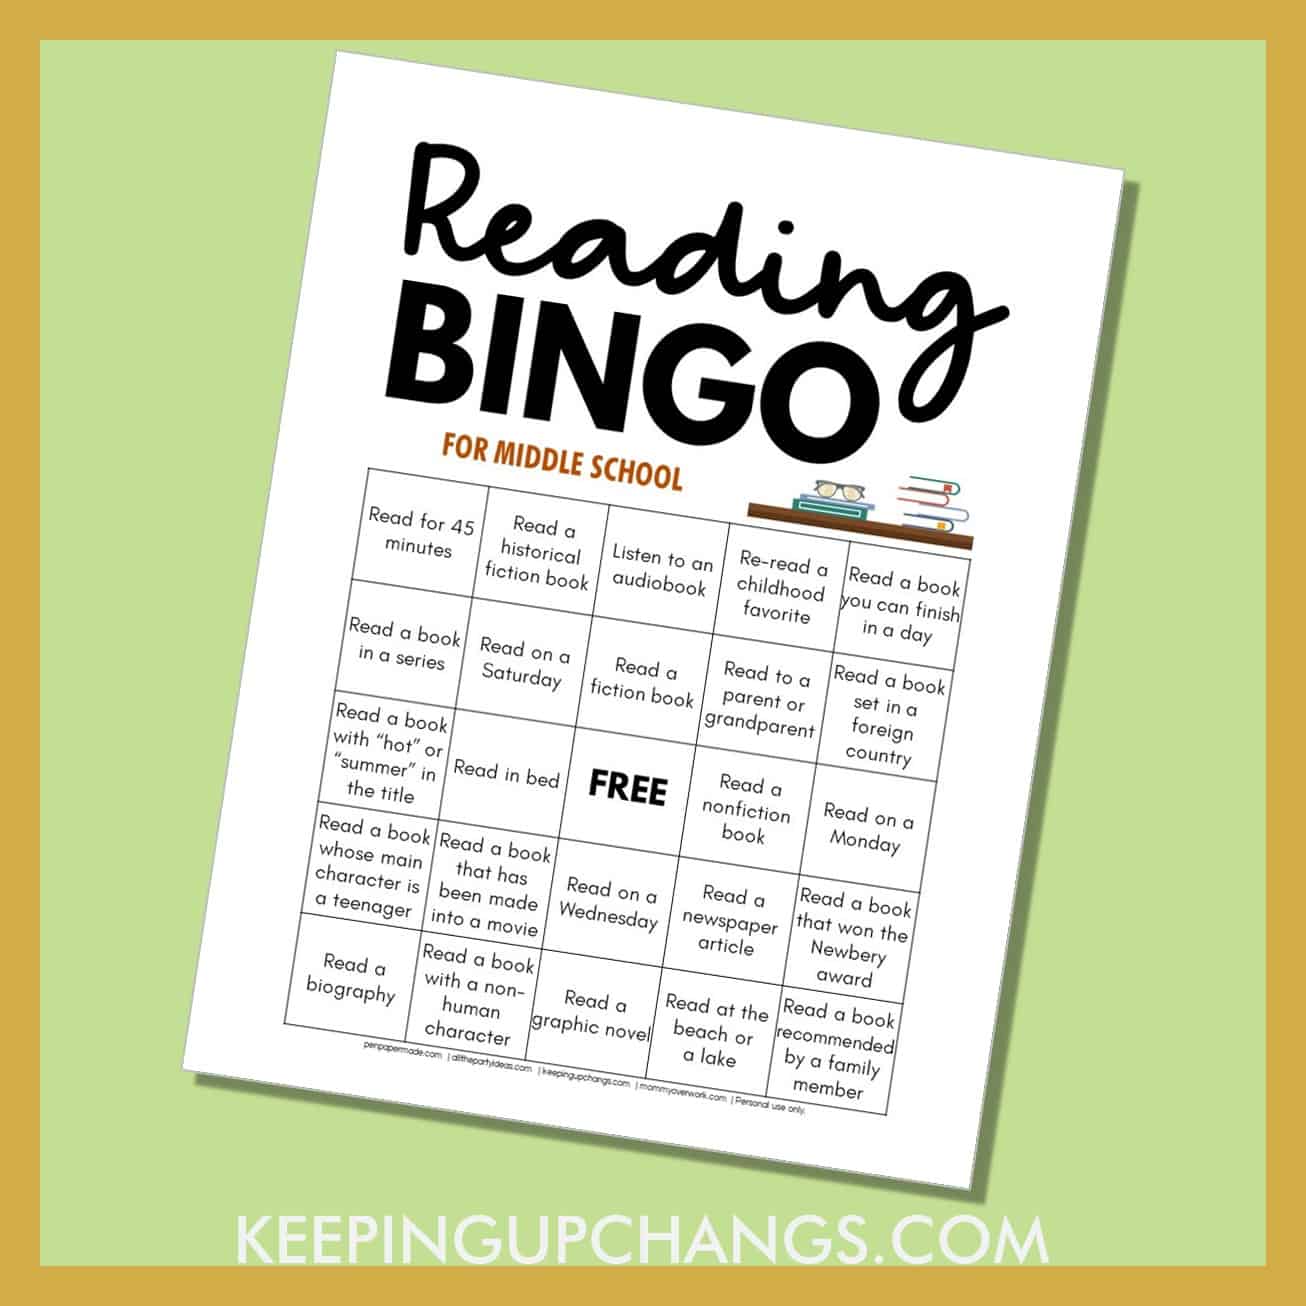 middle school reading bingo challenge with fun ways to enjoy reading.